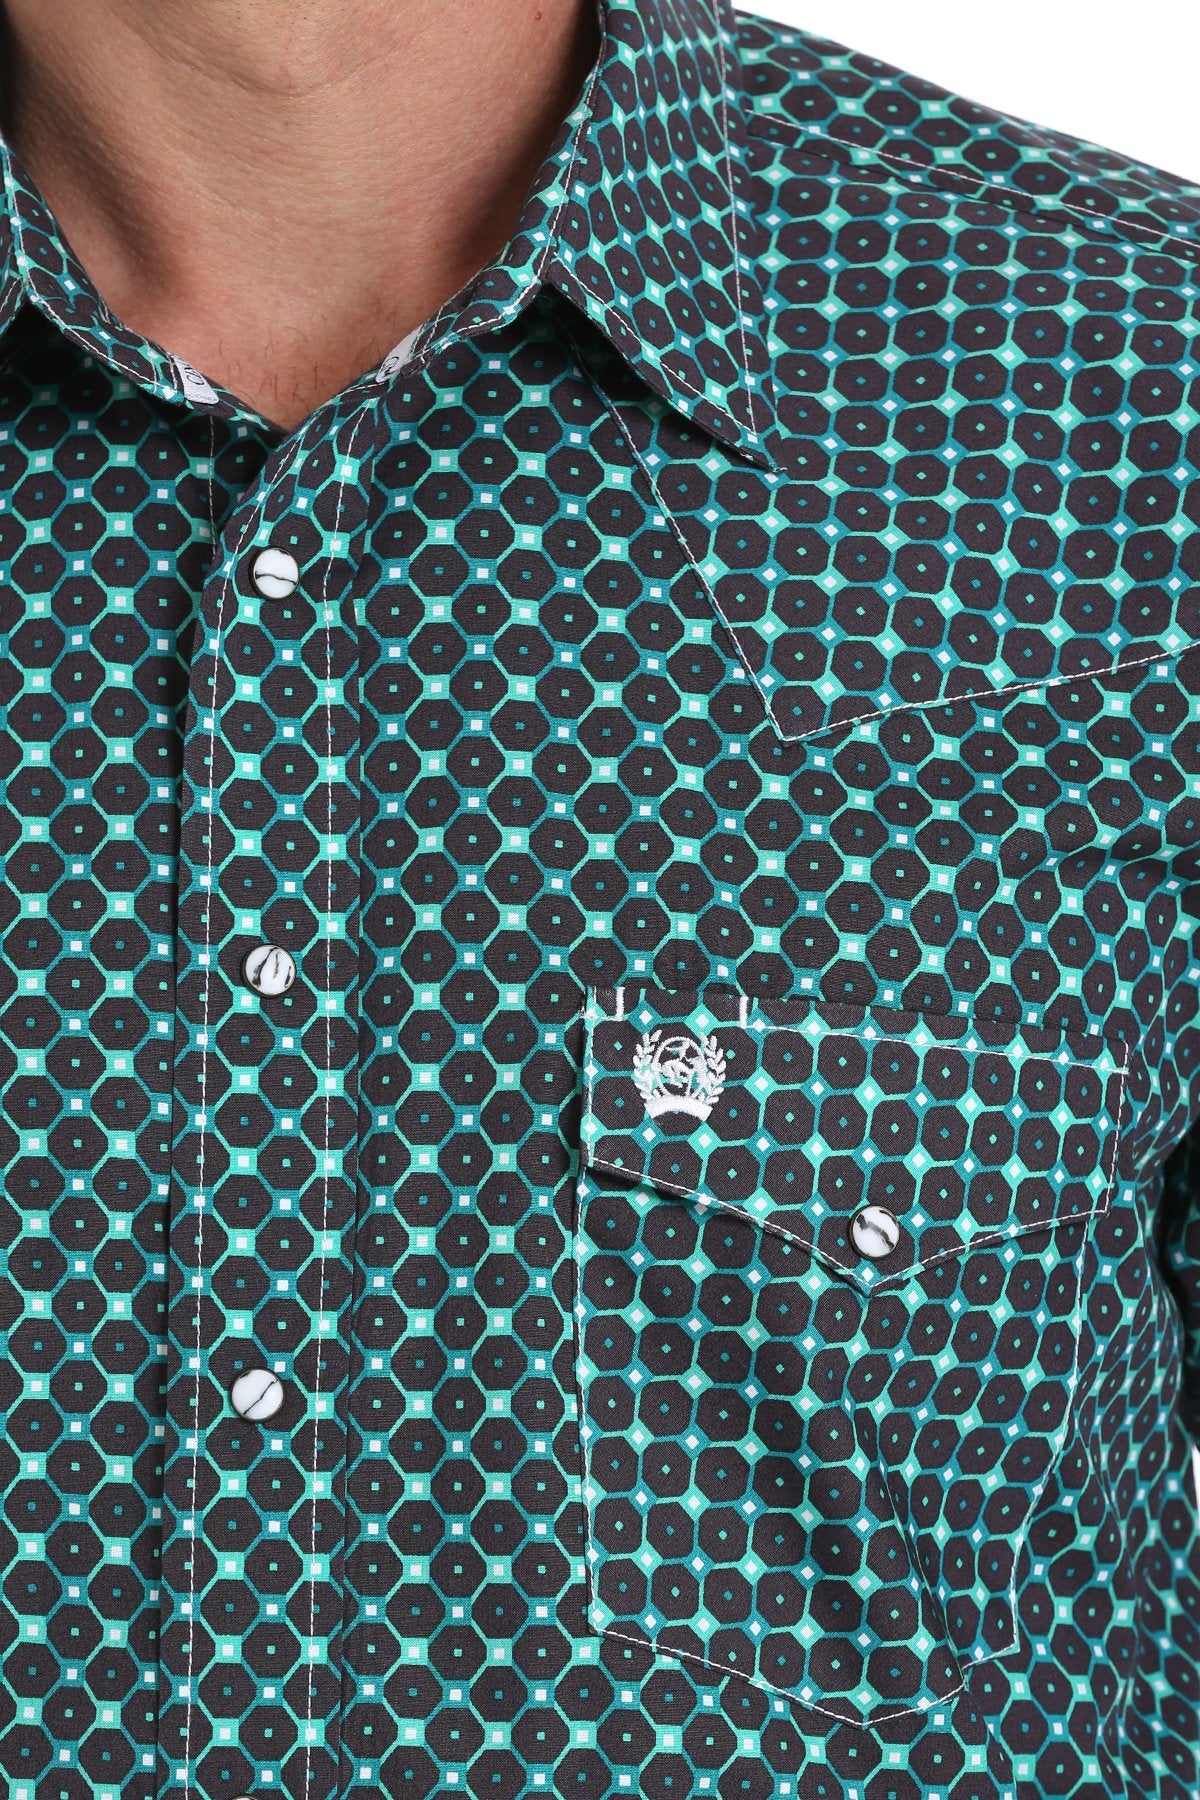 Cinch Men's Brown, Green, and Teal Geometric Print Snap Western Shirt